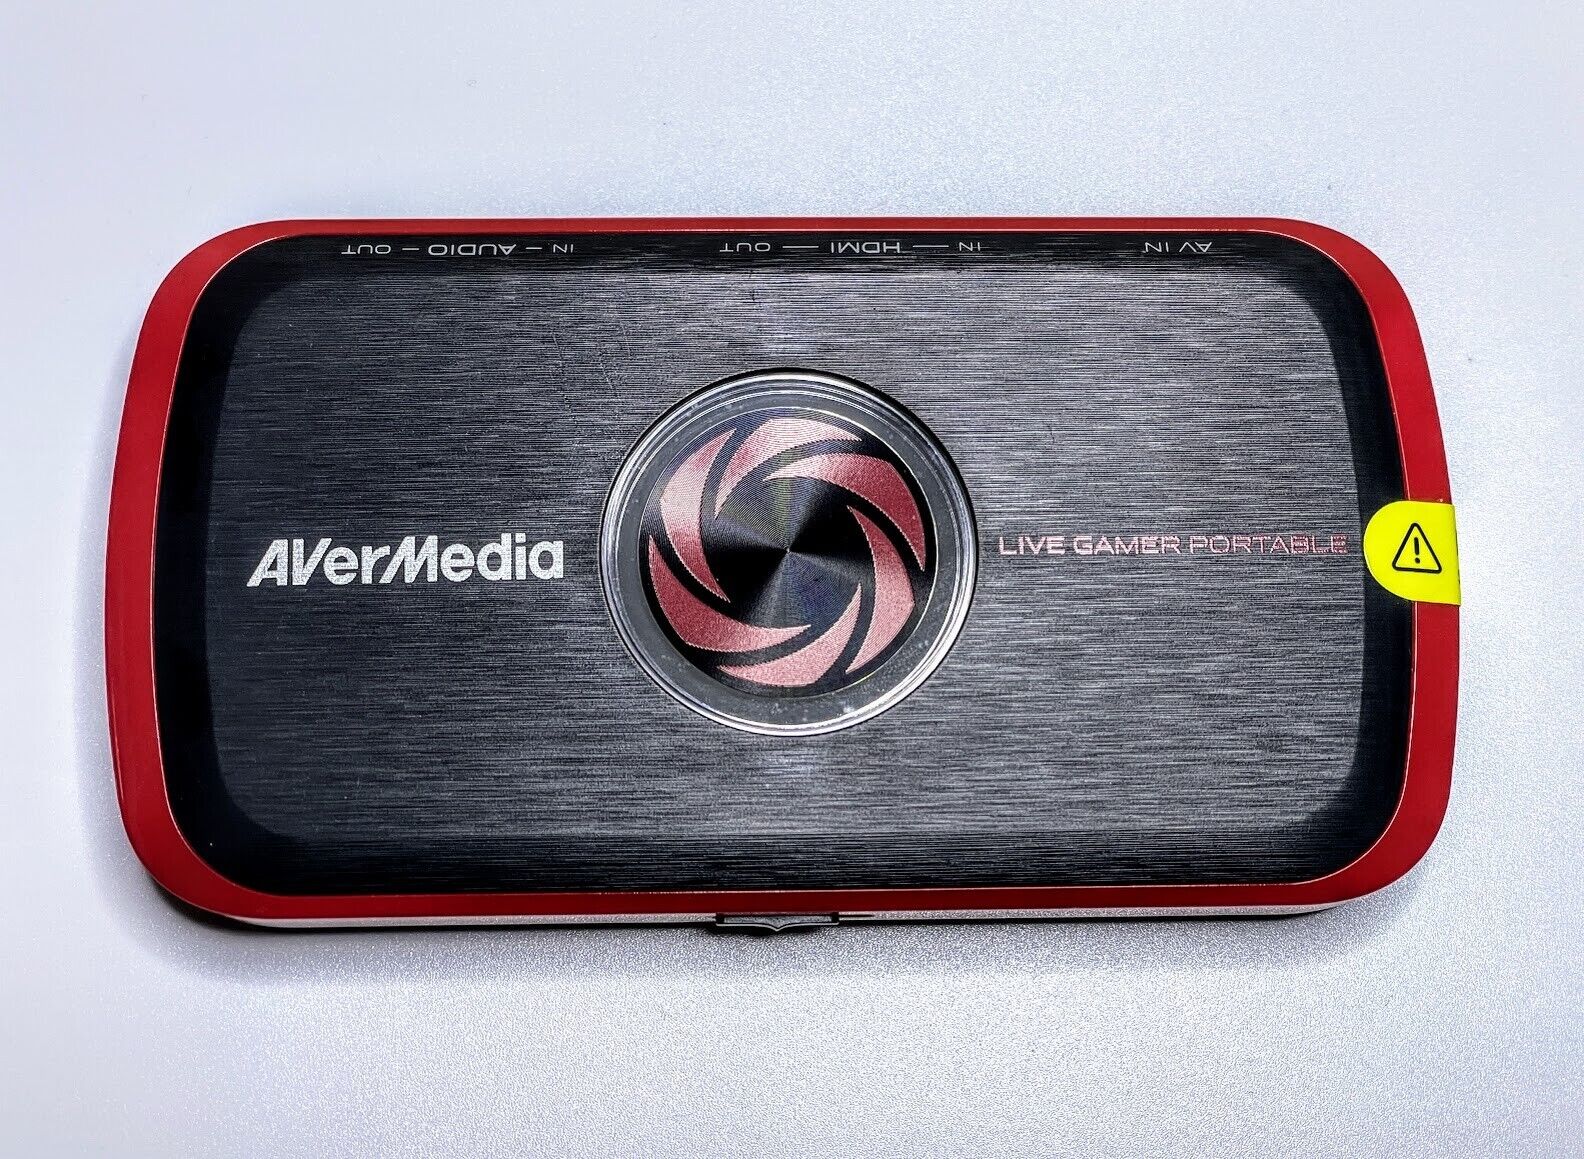 AverMedia C875 Live Gamer Portable Capture Device AVT-C875